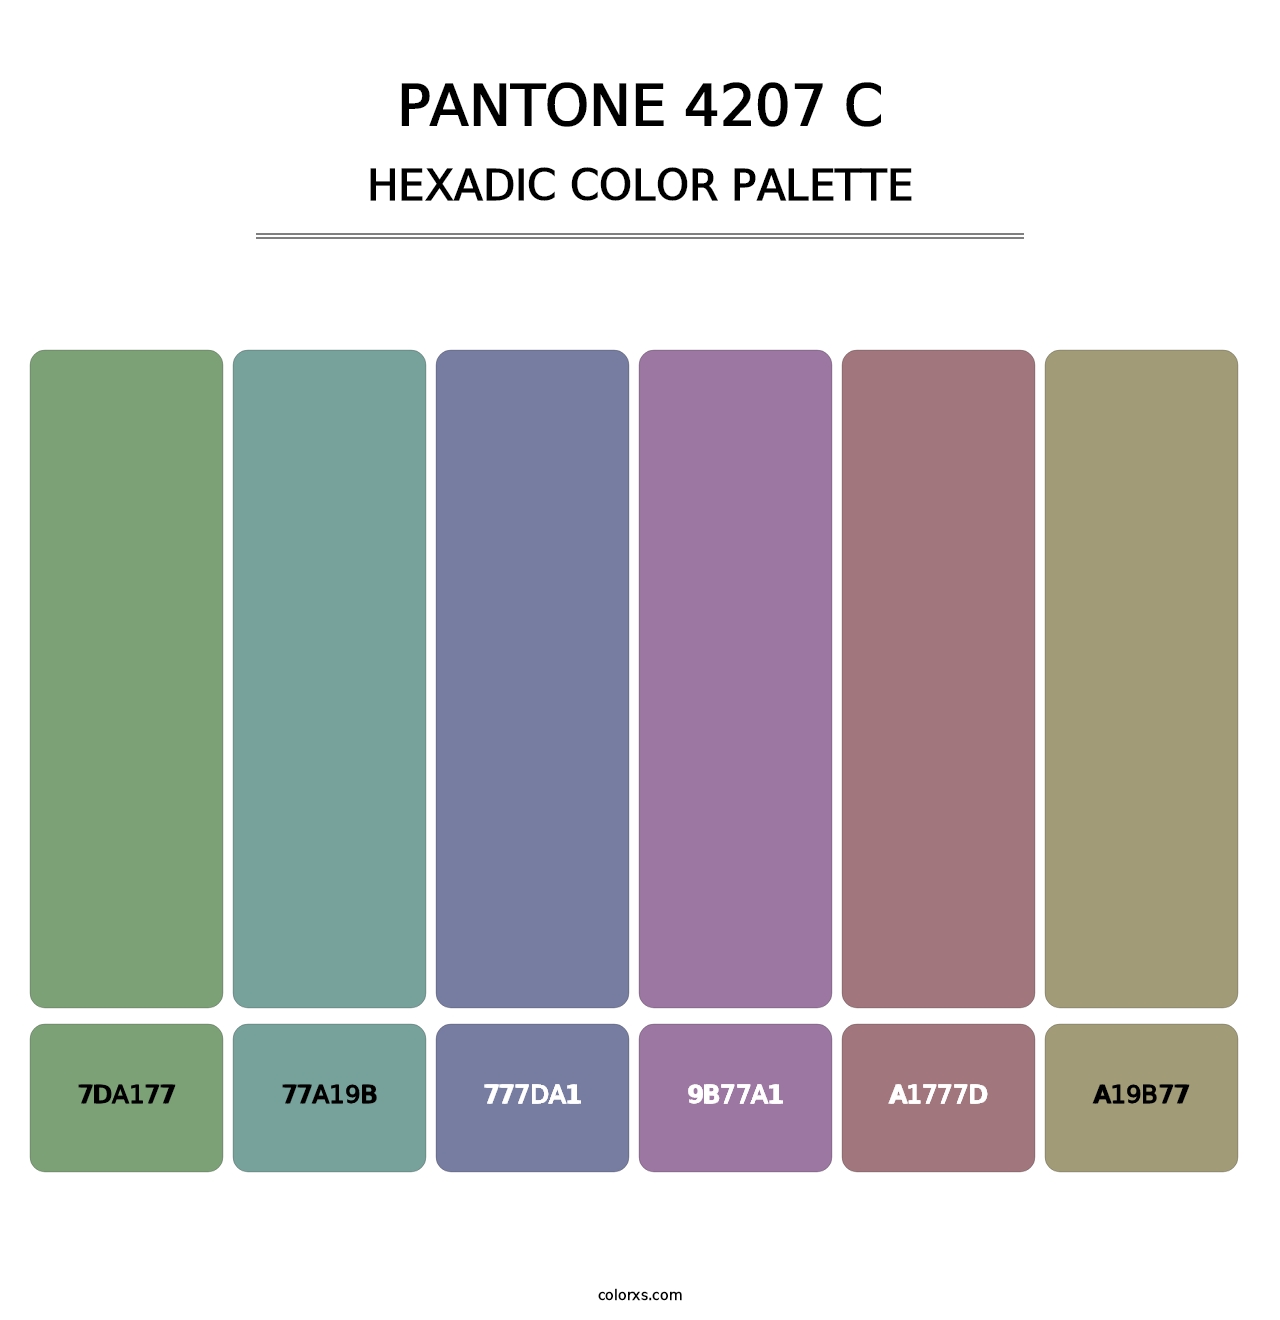 PANTONE 4207 C - Hexadic Color Palette